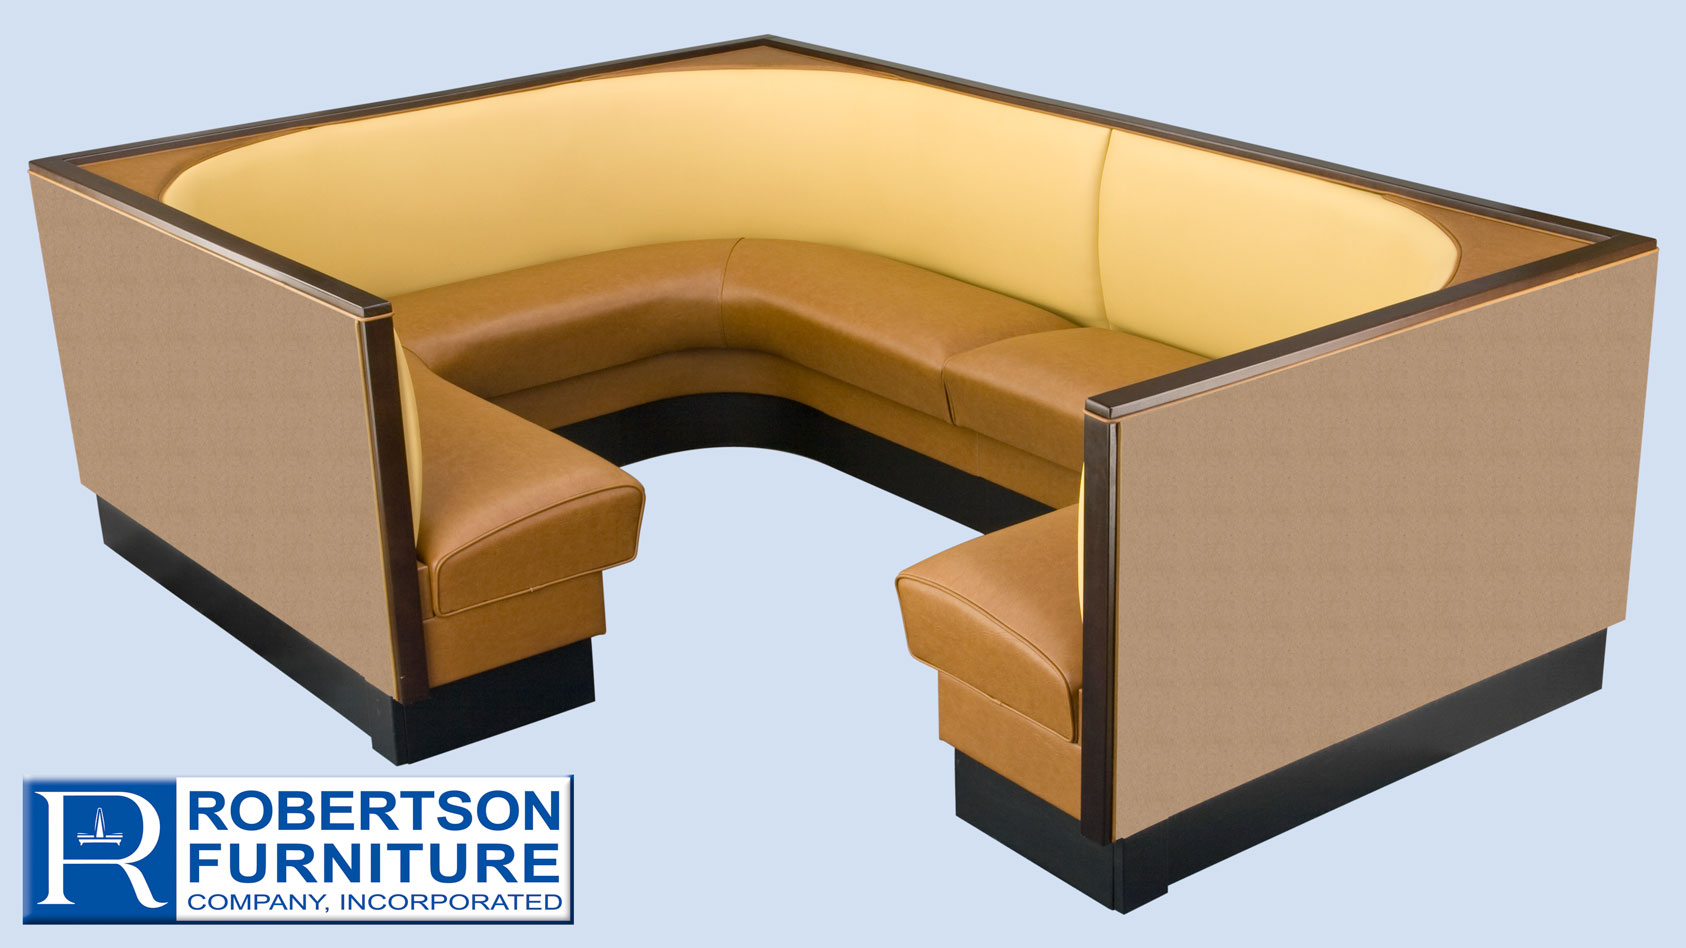 Robertson Furniture Company, Inc.